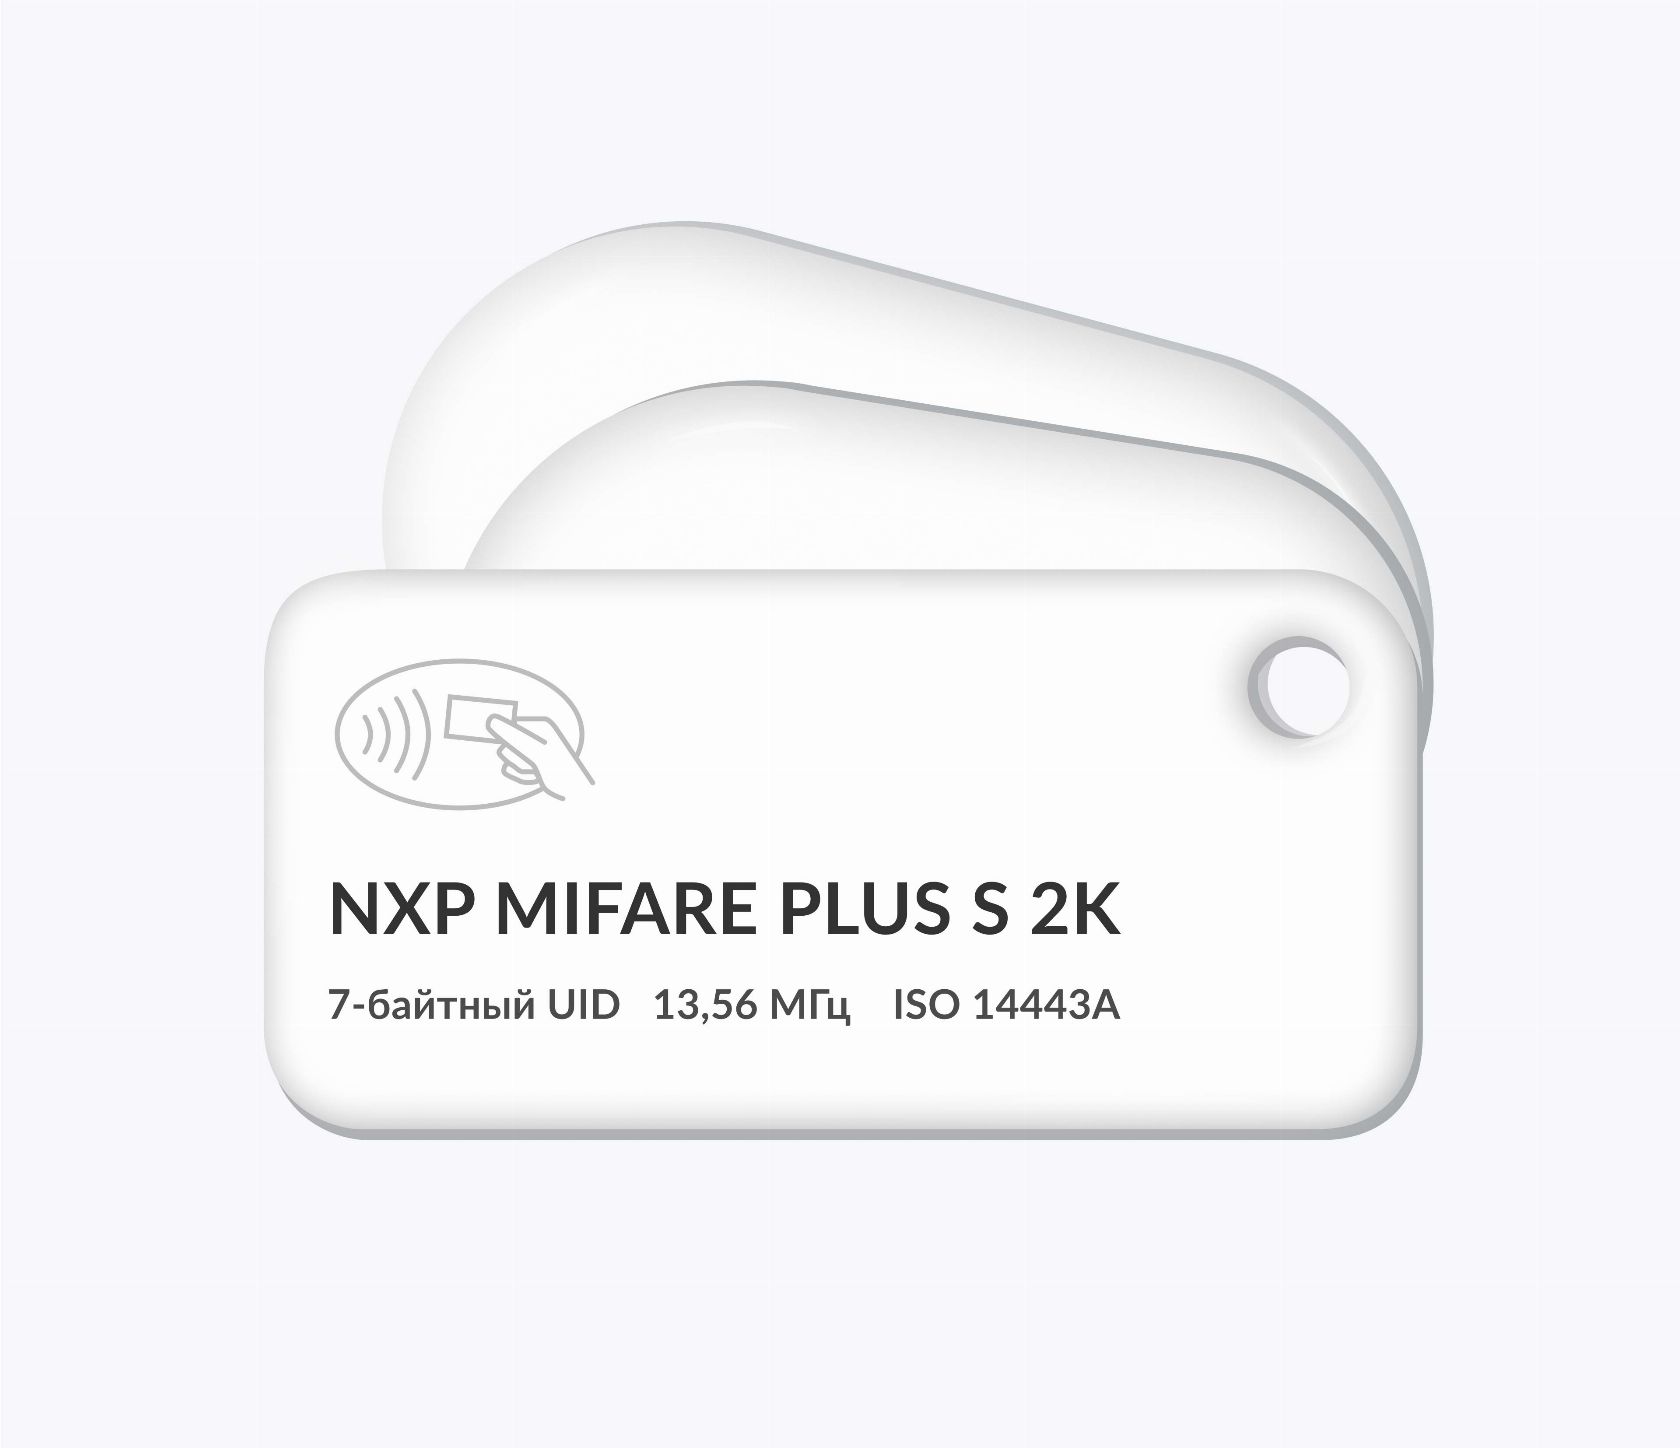 RFID-брелоки NEOKEY® с чипом NXP MIFARE Plus S 2k 7 byte UID и вашим логотипом